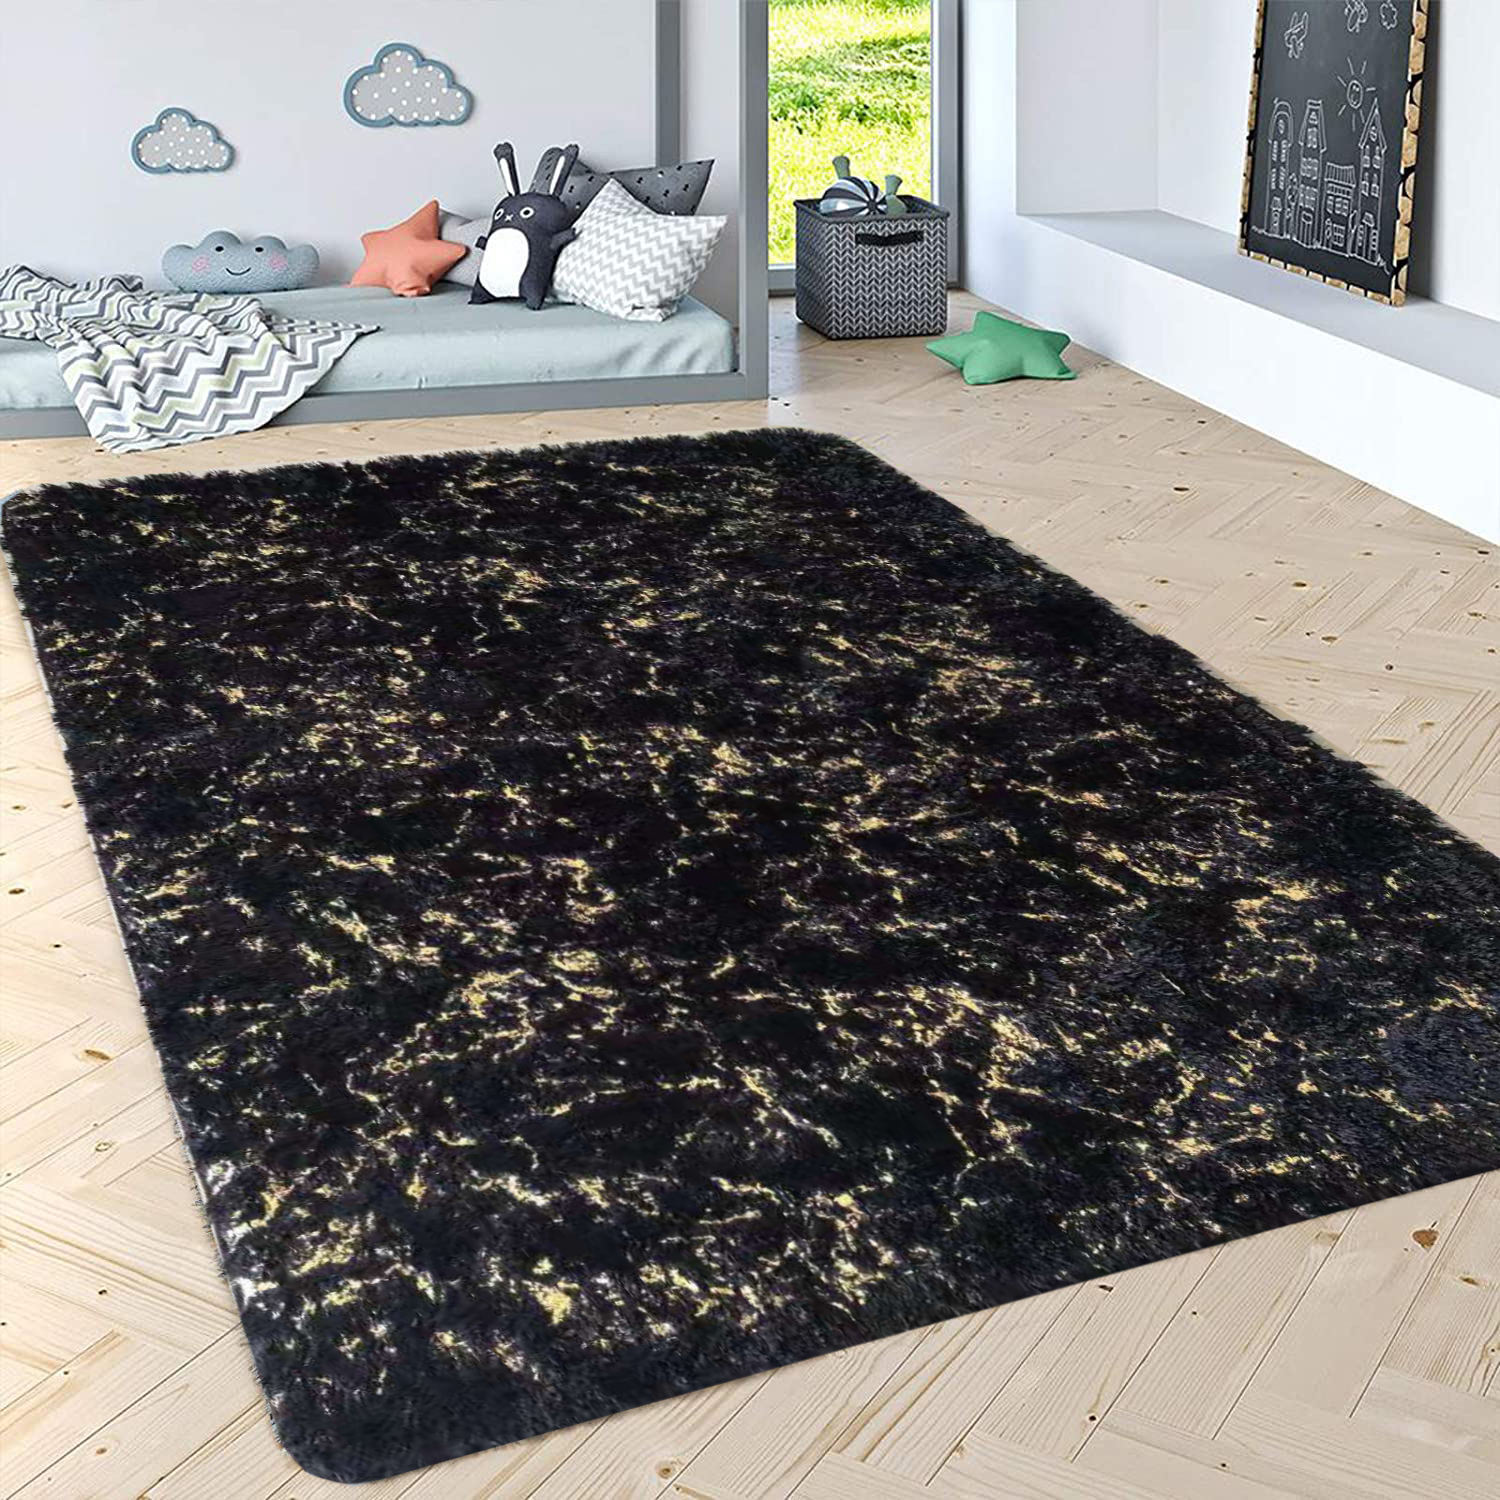 Amazon Hot Selling Shaggy Living Room Center رگ گولڈ سلور گولڈ بلاکنگ Comfy Floor Rug Area Carpet